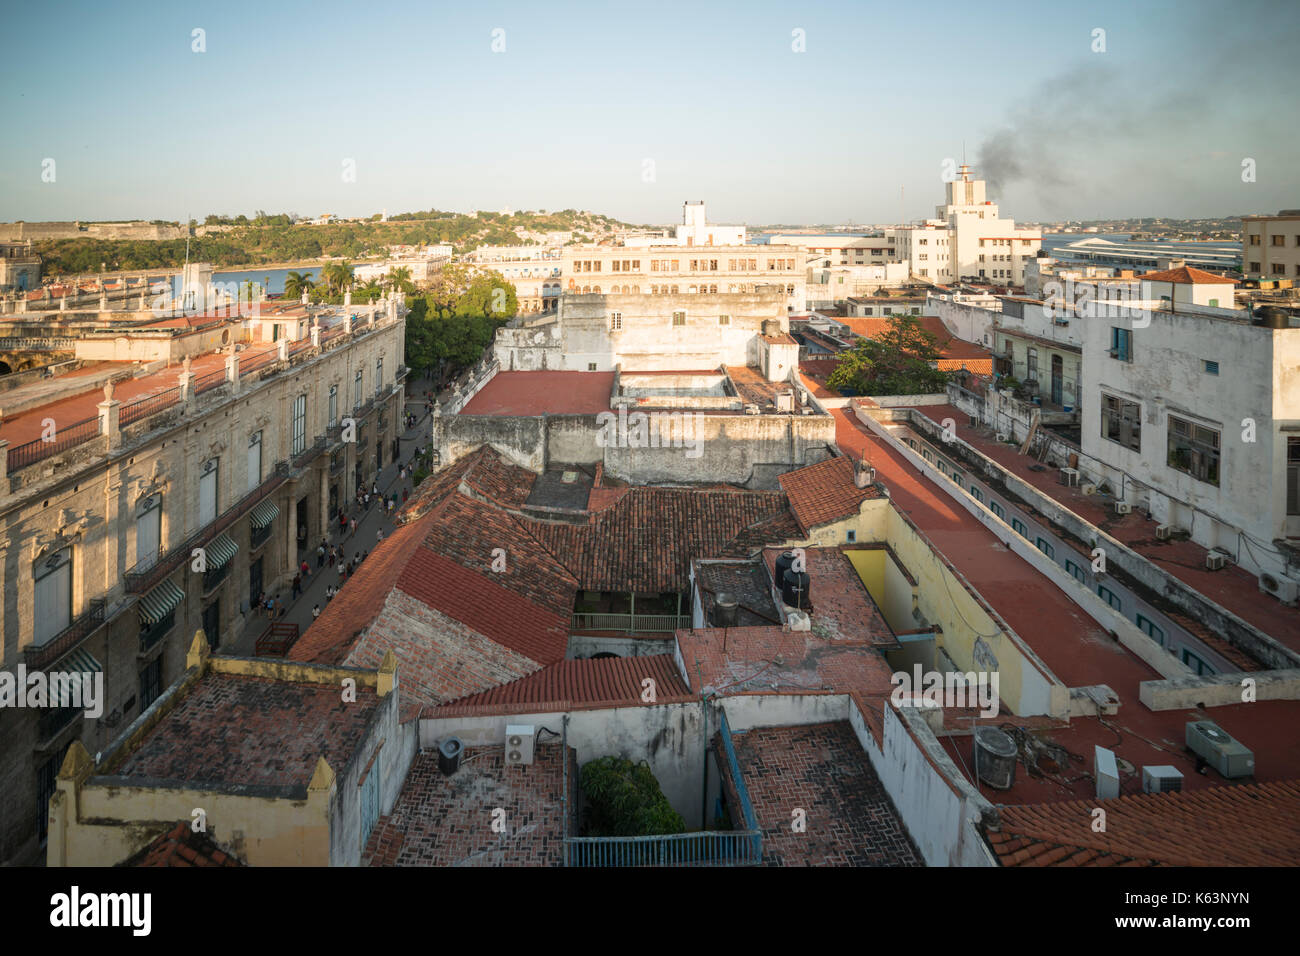 Havanna, - gennaio 09, viaggi, Havanna, Cuba, La Habana città . nell'immagine: Hotel ambos mandos - resisdenz oft autore Ernest Hemingway. (Foto di Foto Stock